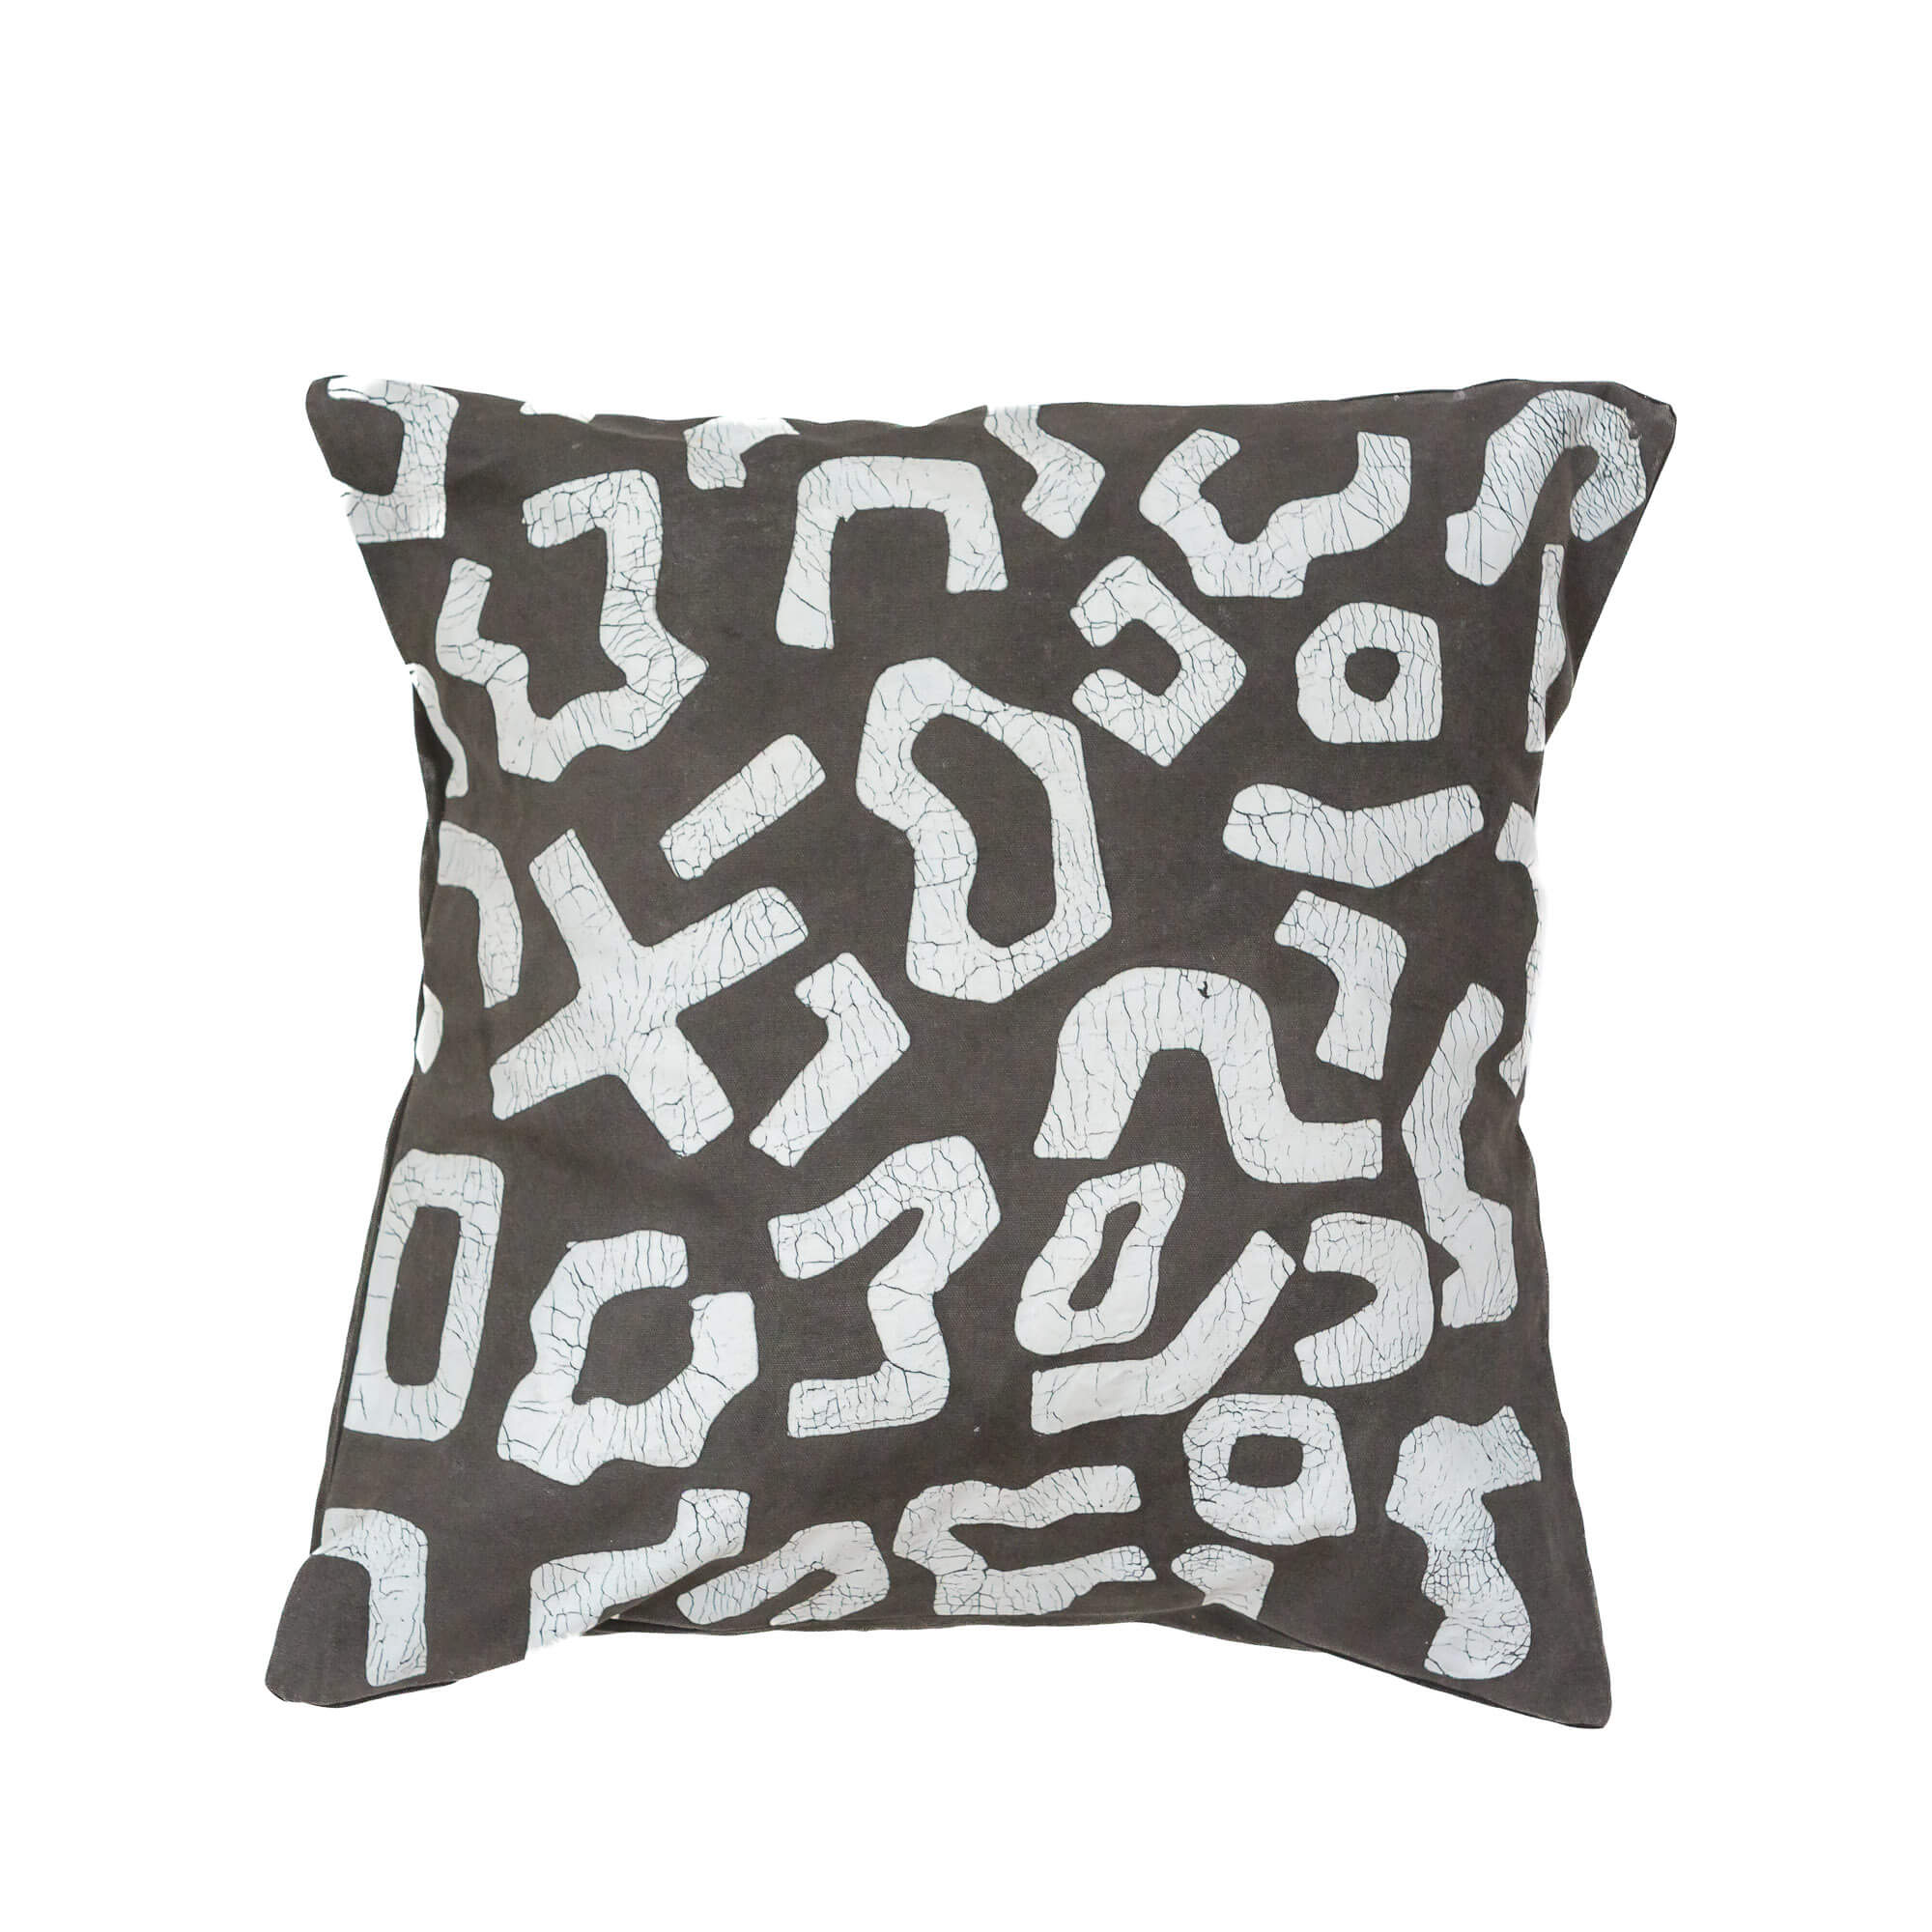 Kuba Charcoal Filled Cushion Cover